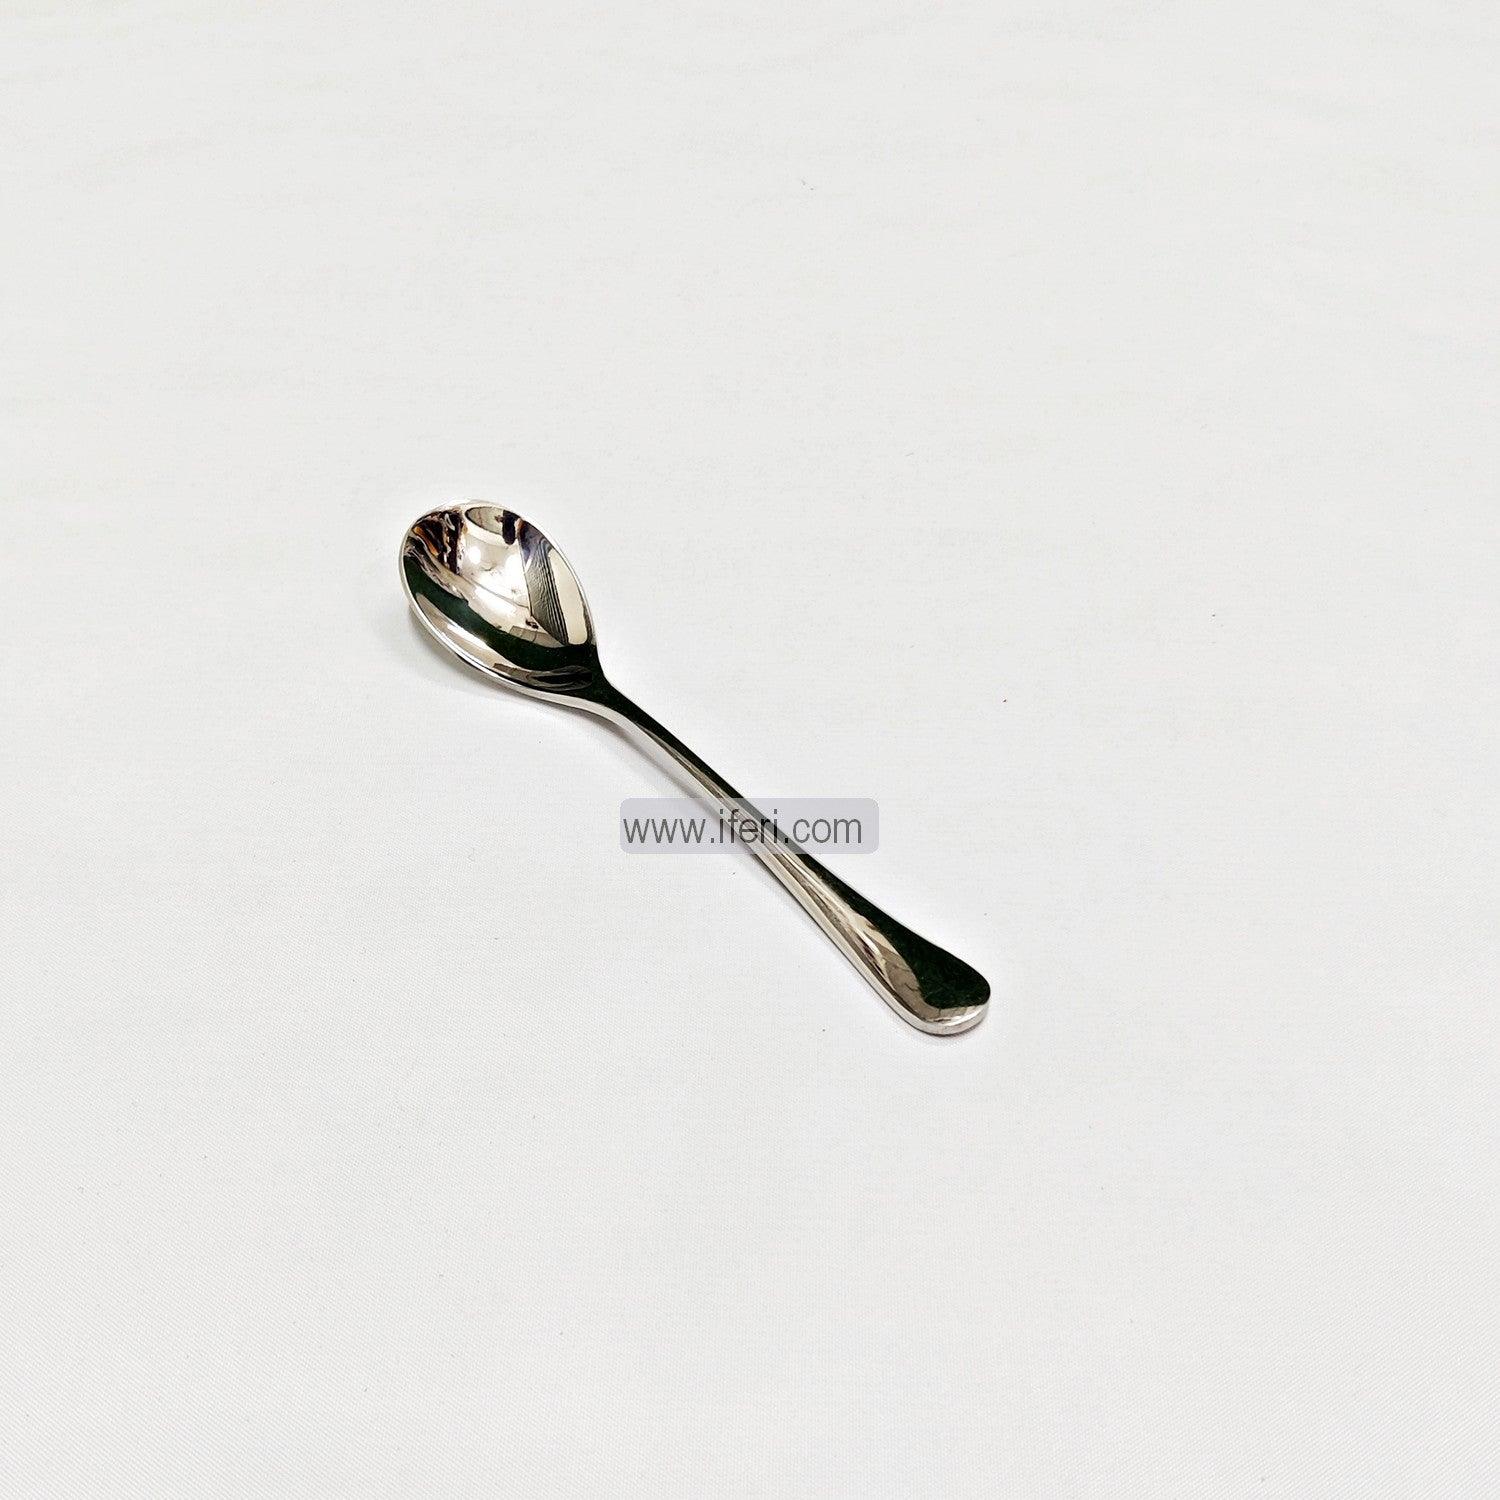 5 inch 6 pcs Metal Tea Spoon EB9120 Price in Bangladesh - iferi.com